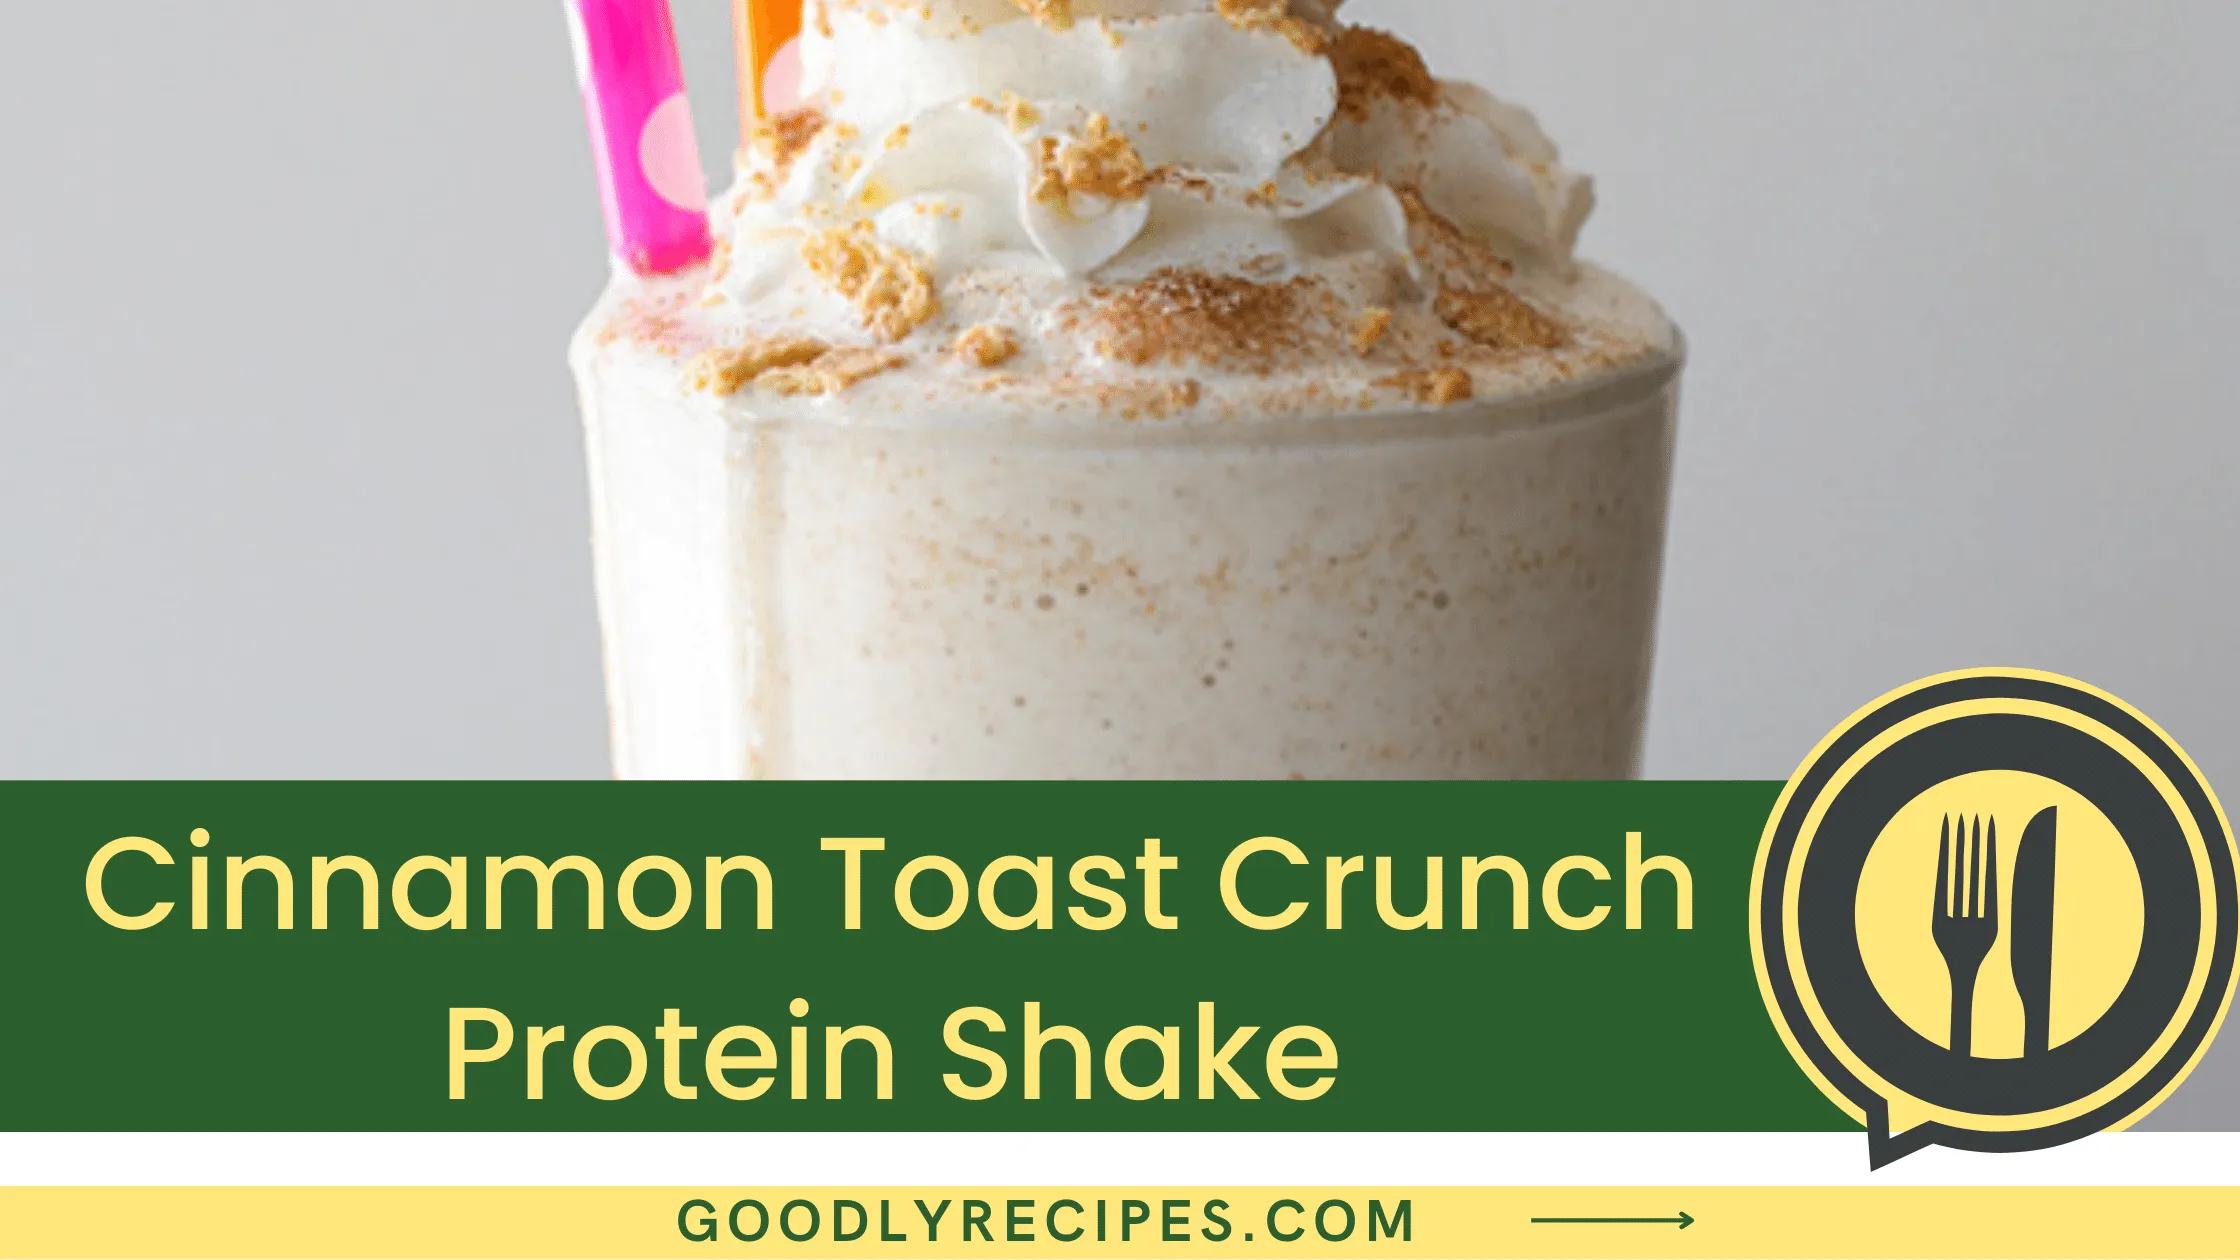 Cinnamon Toast Crunch Protein Shake